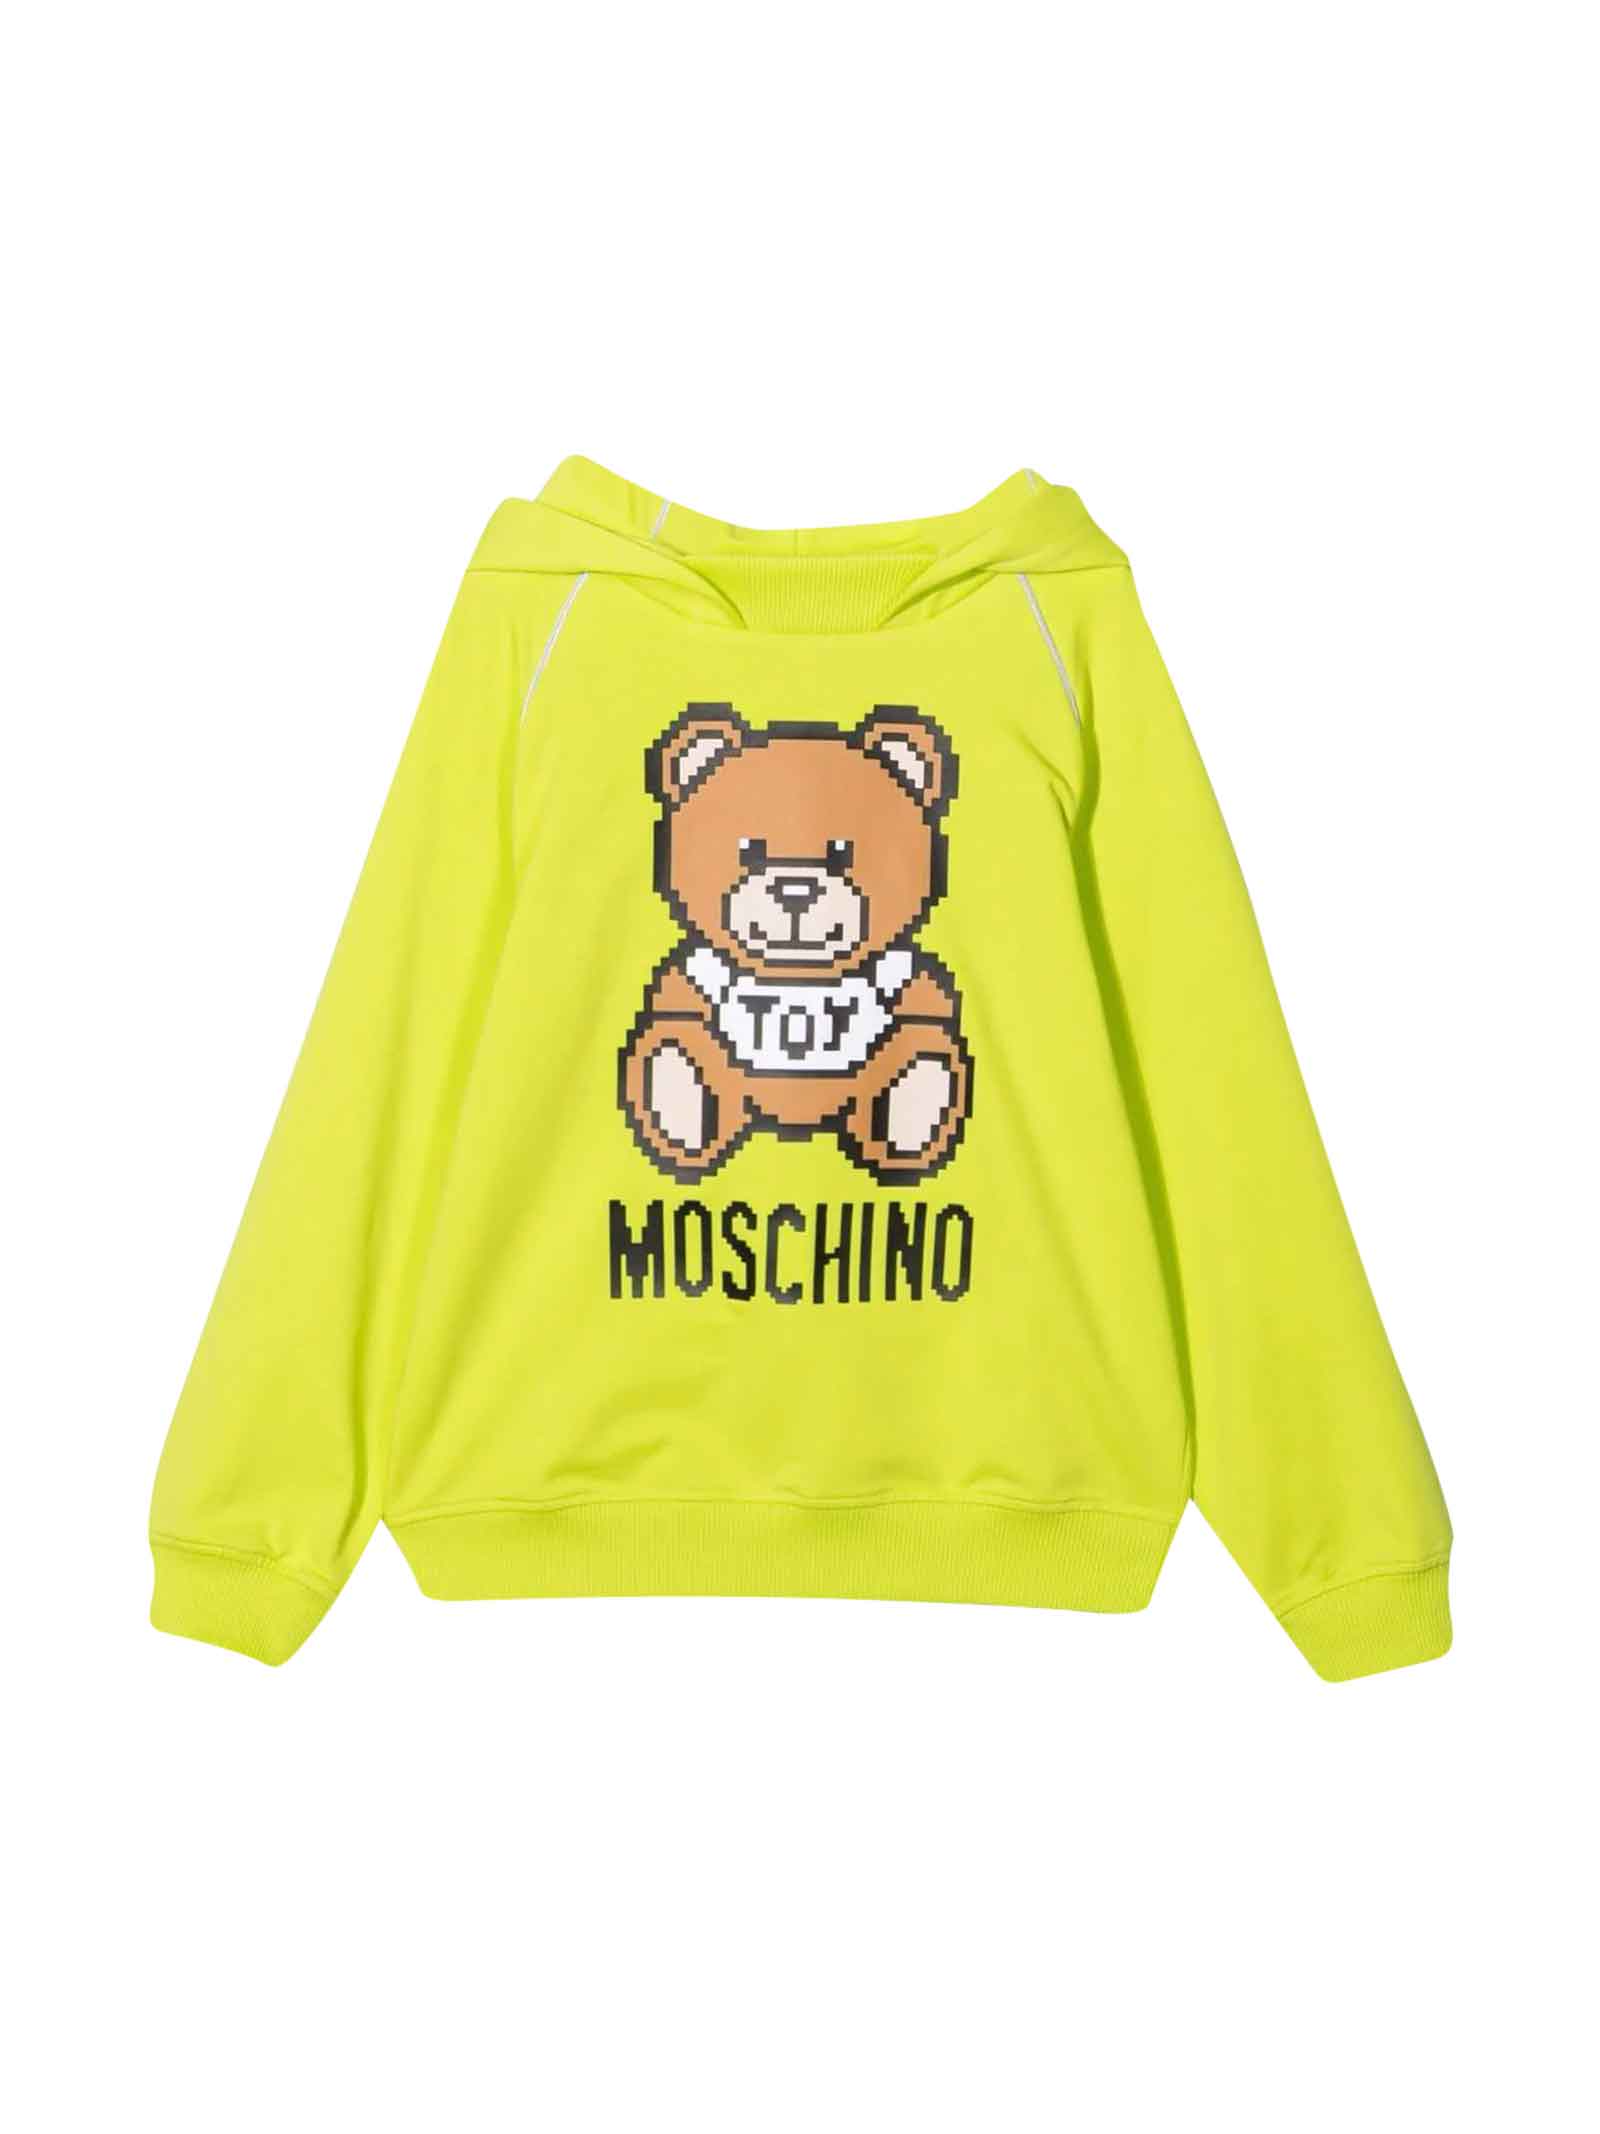 Moschino Yellow Fluo Sweatshirt With Hood And Toy Print